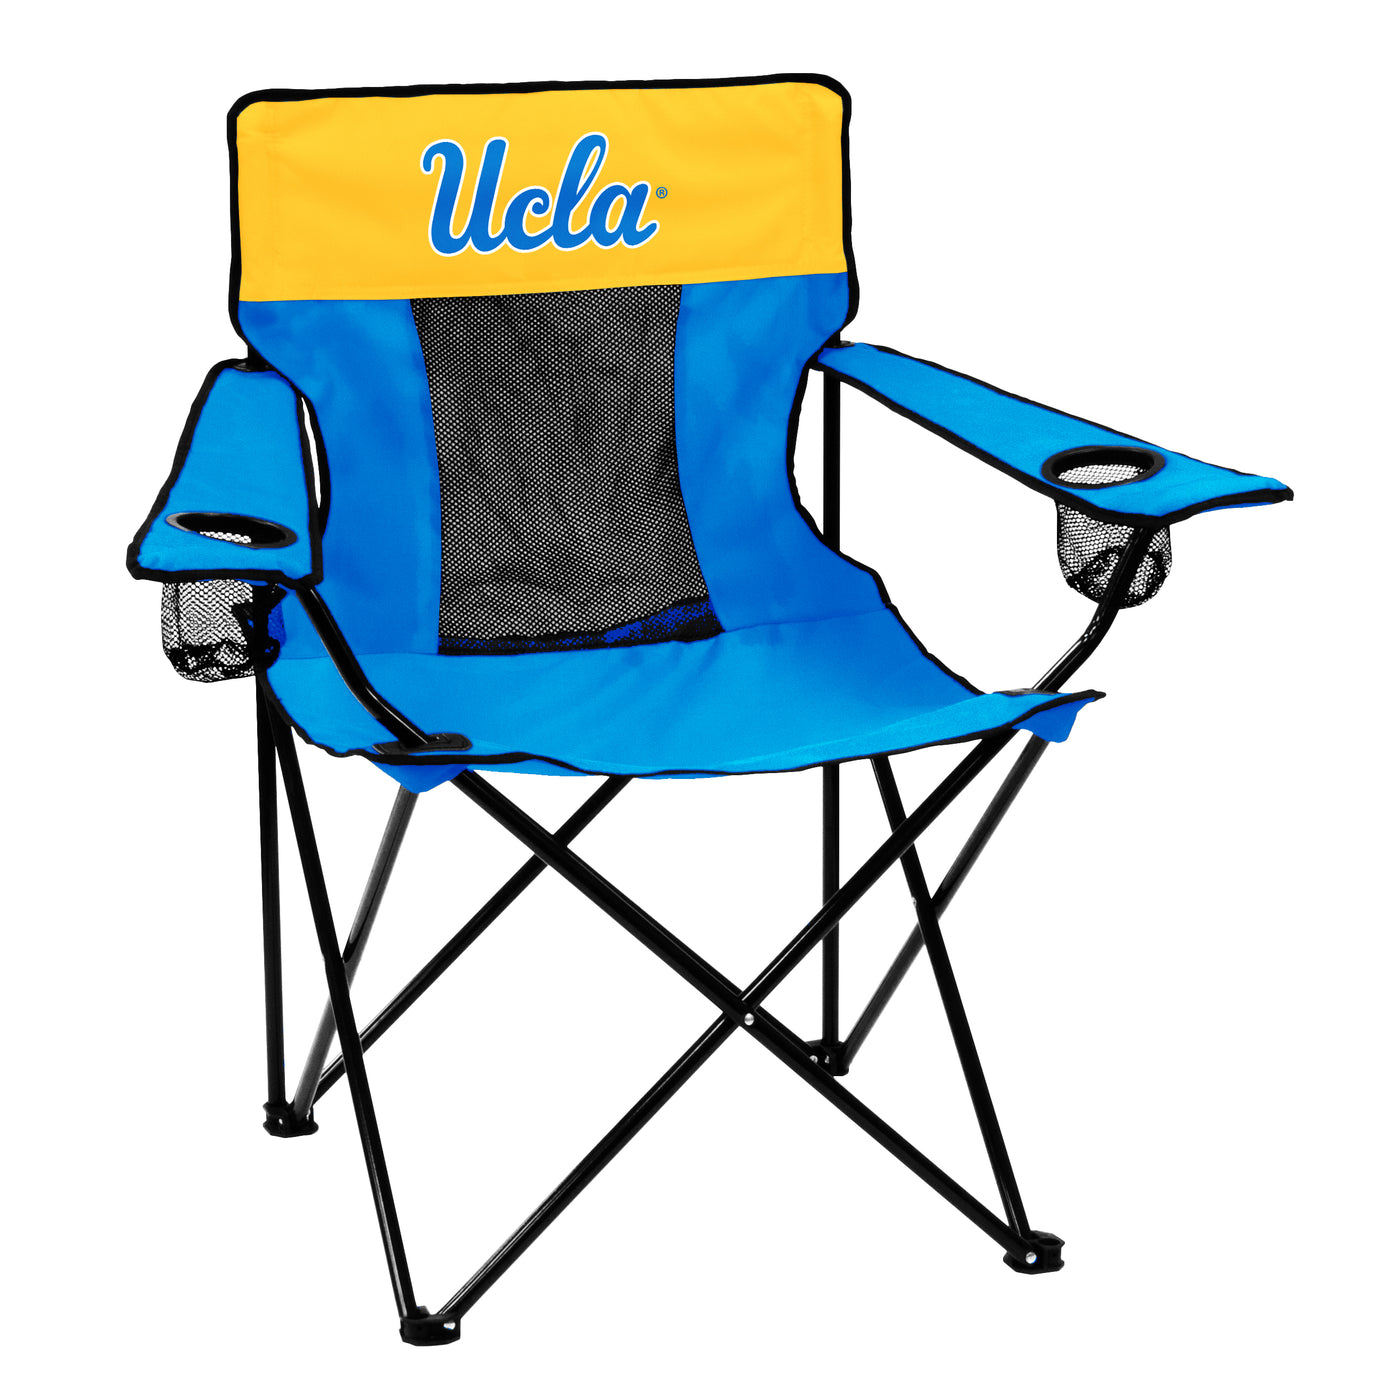 UCLA Elite Chair